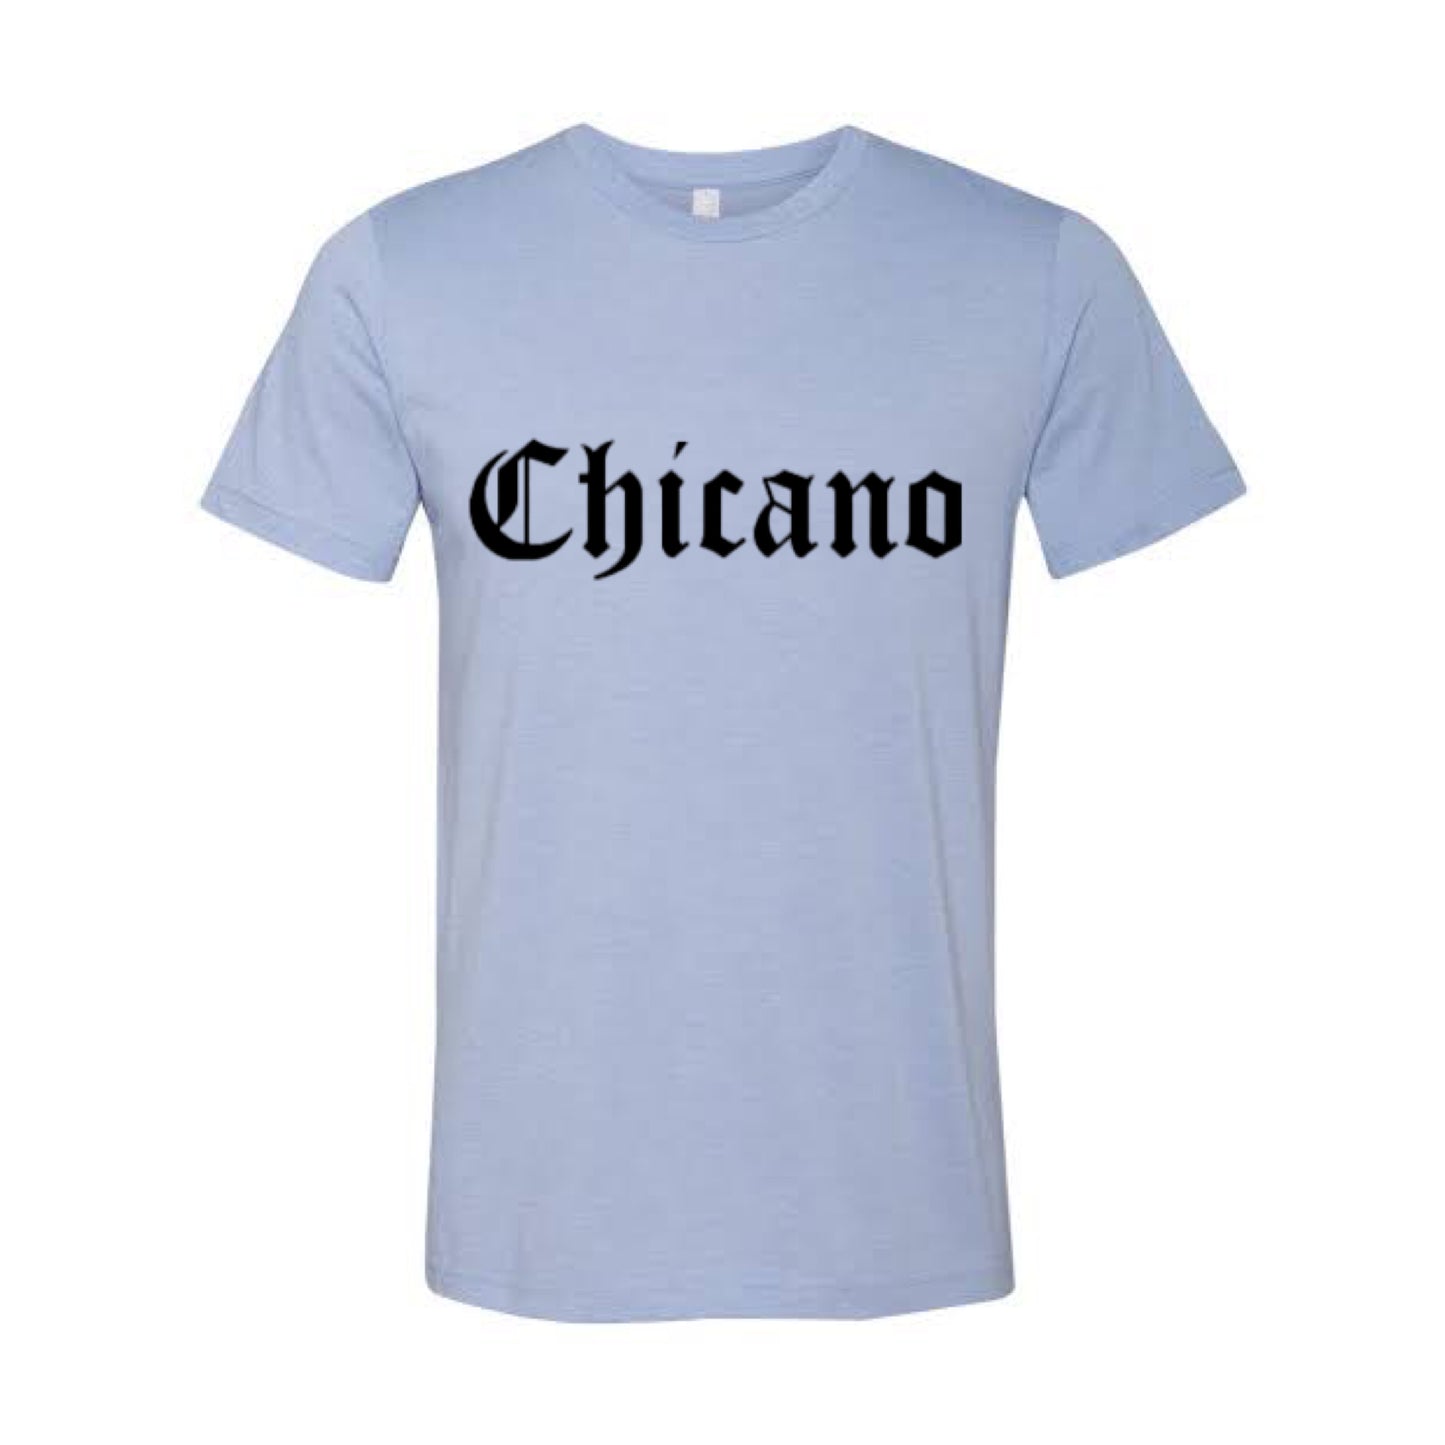 Chicano, Chicana, Chicanx unisex short-sleeve T-shirt